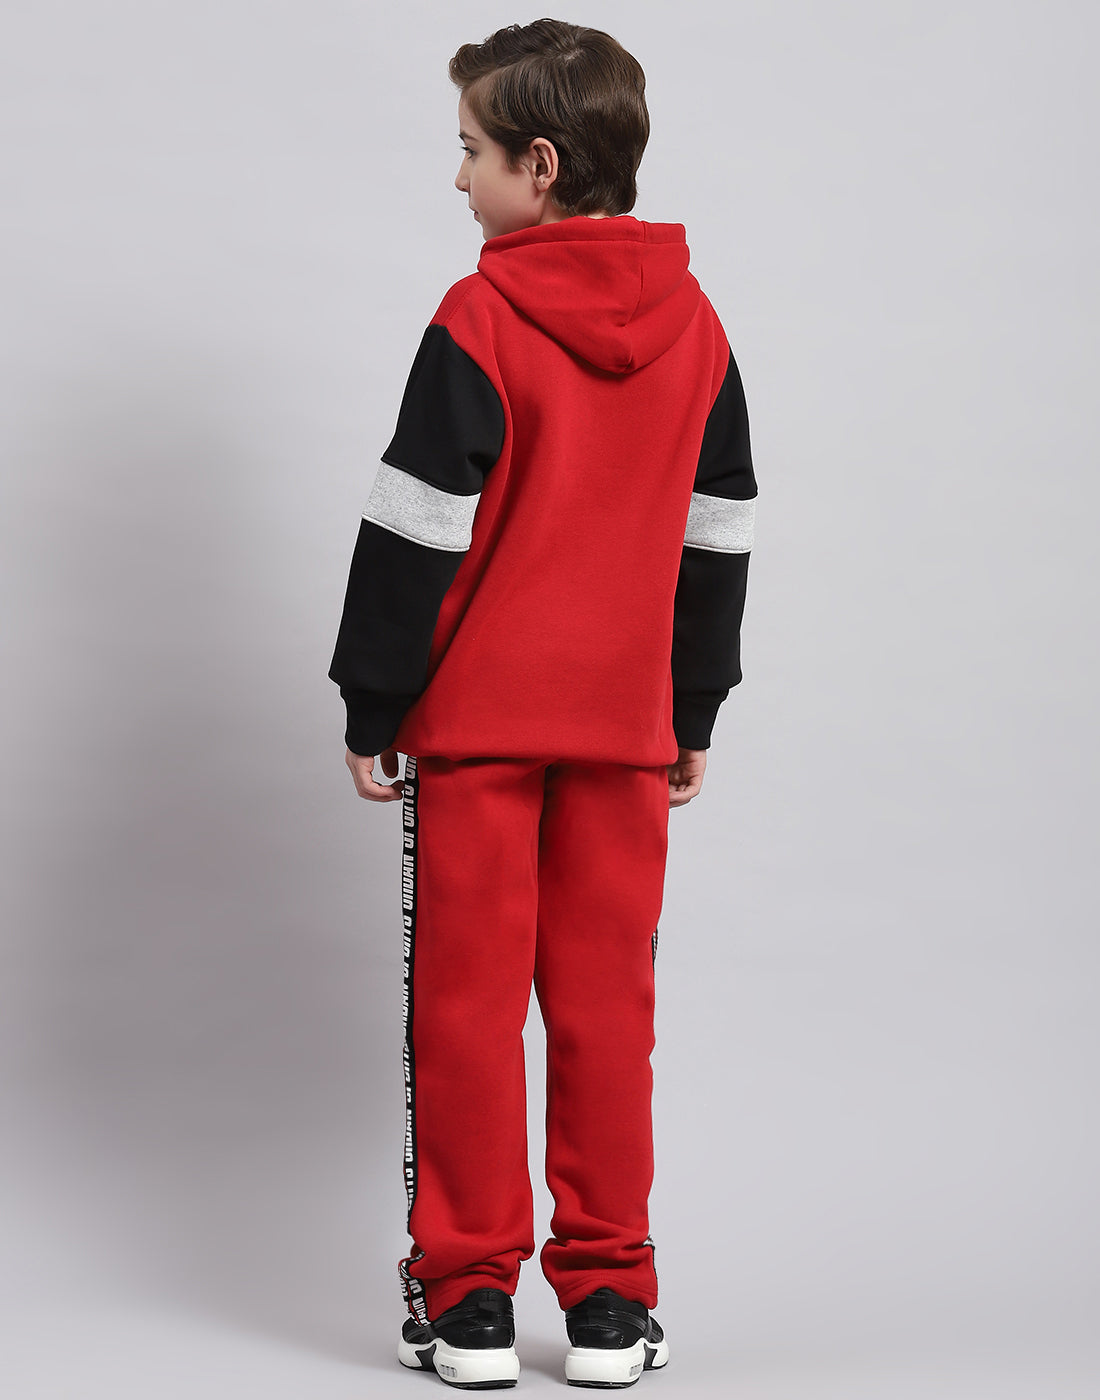 Boys Red Printed Hooded Full Sleeve Tracksuit